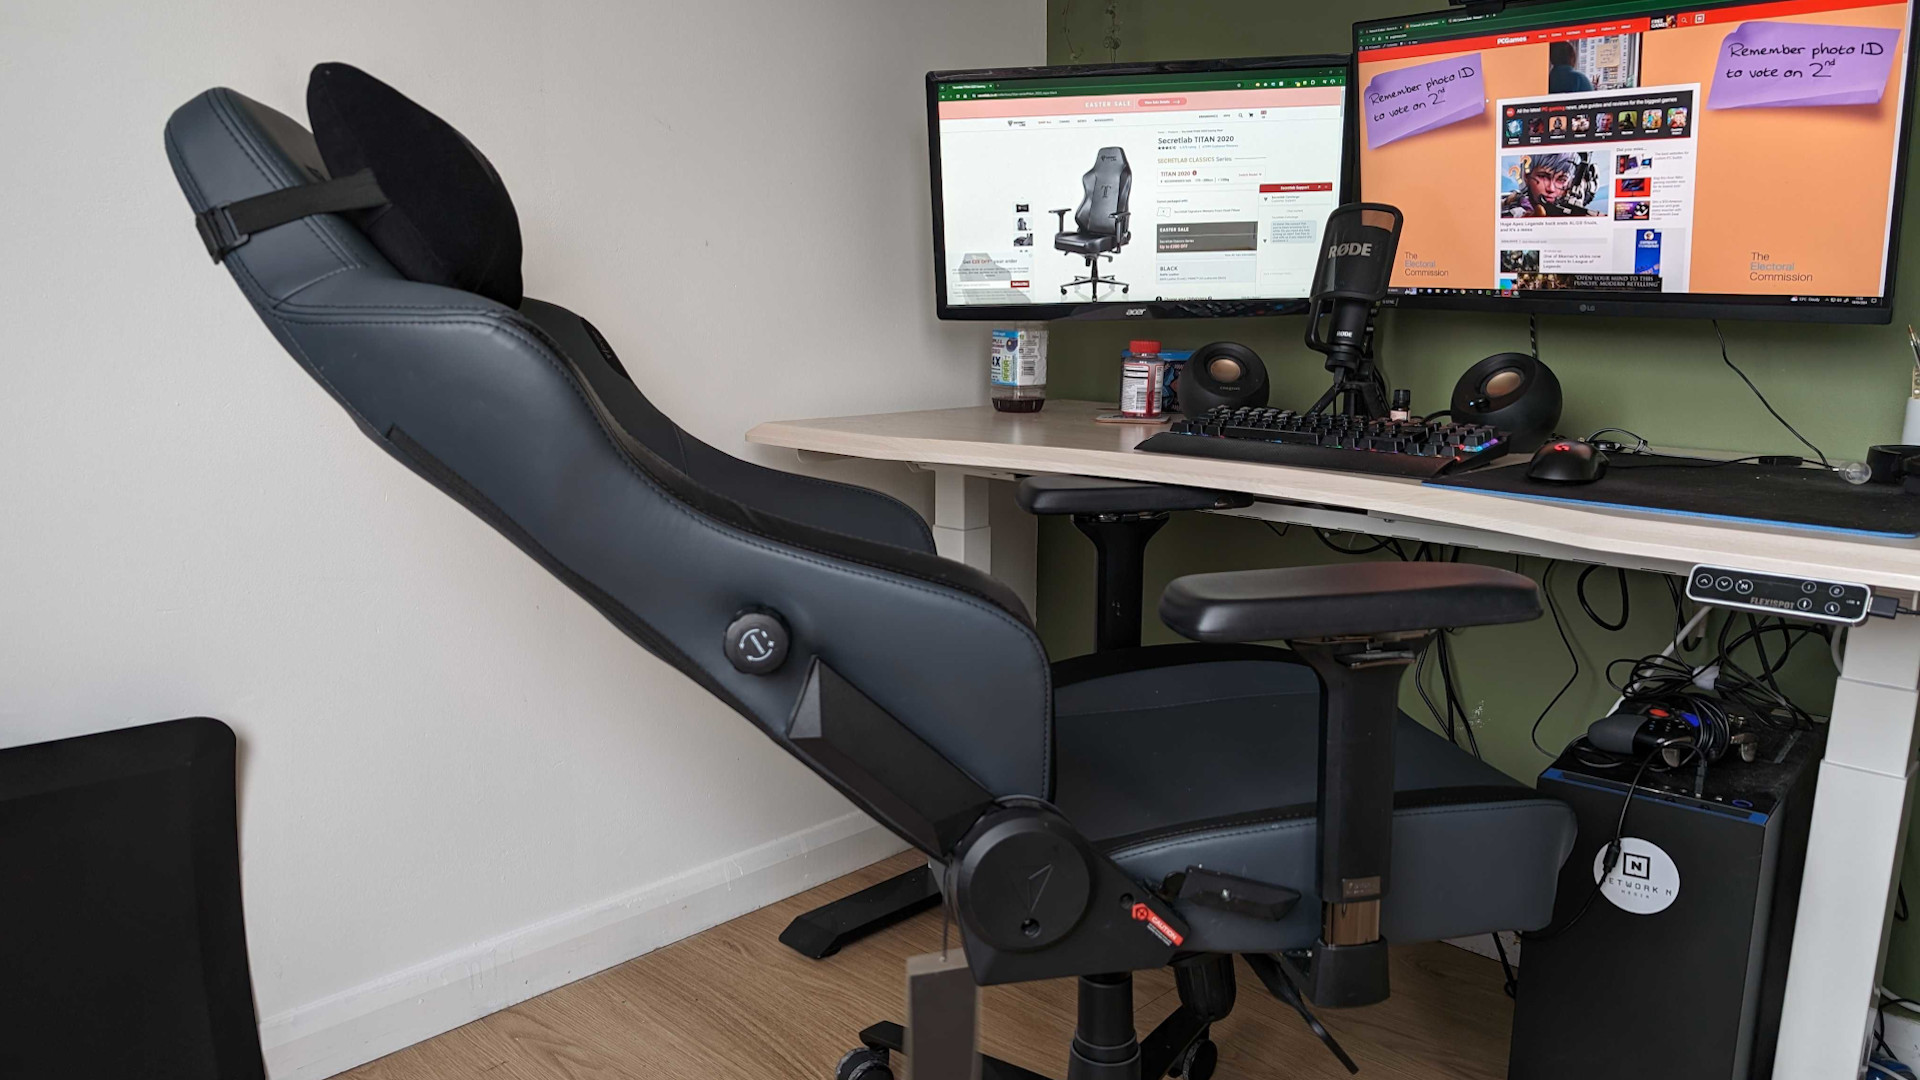 The Secretlab Titan 2020 gaming chair tilted backward